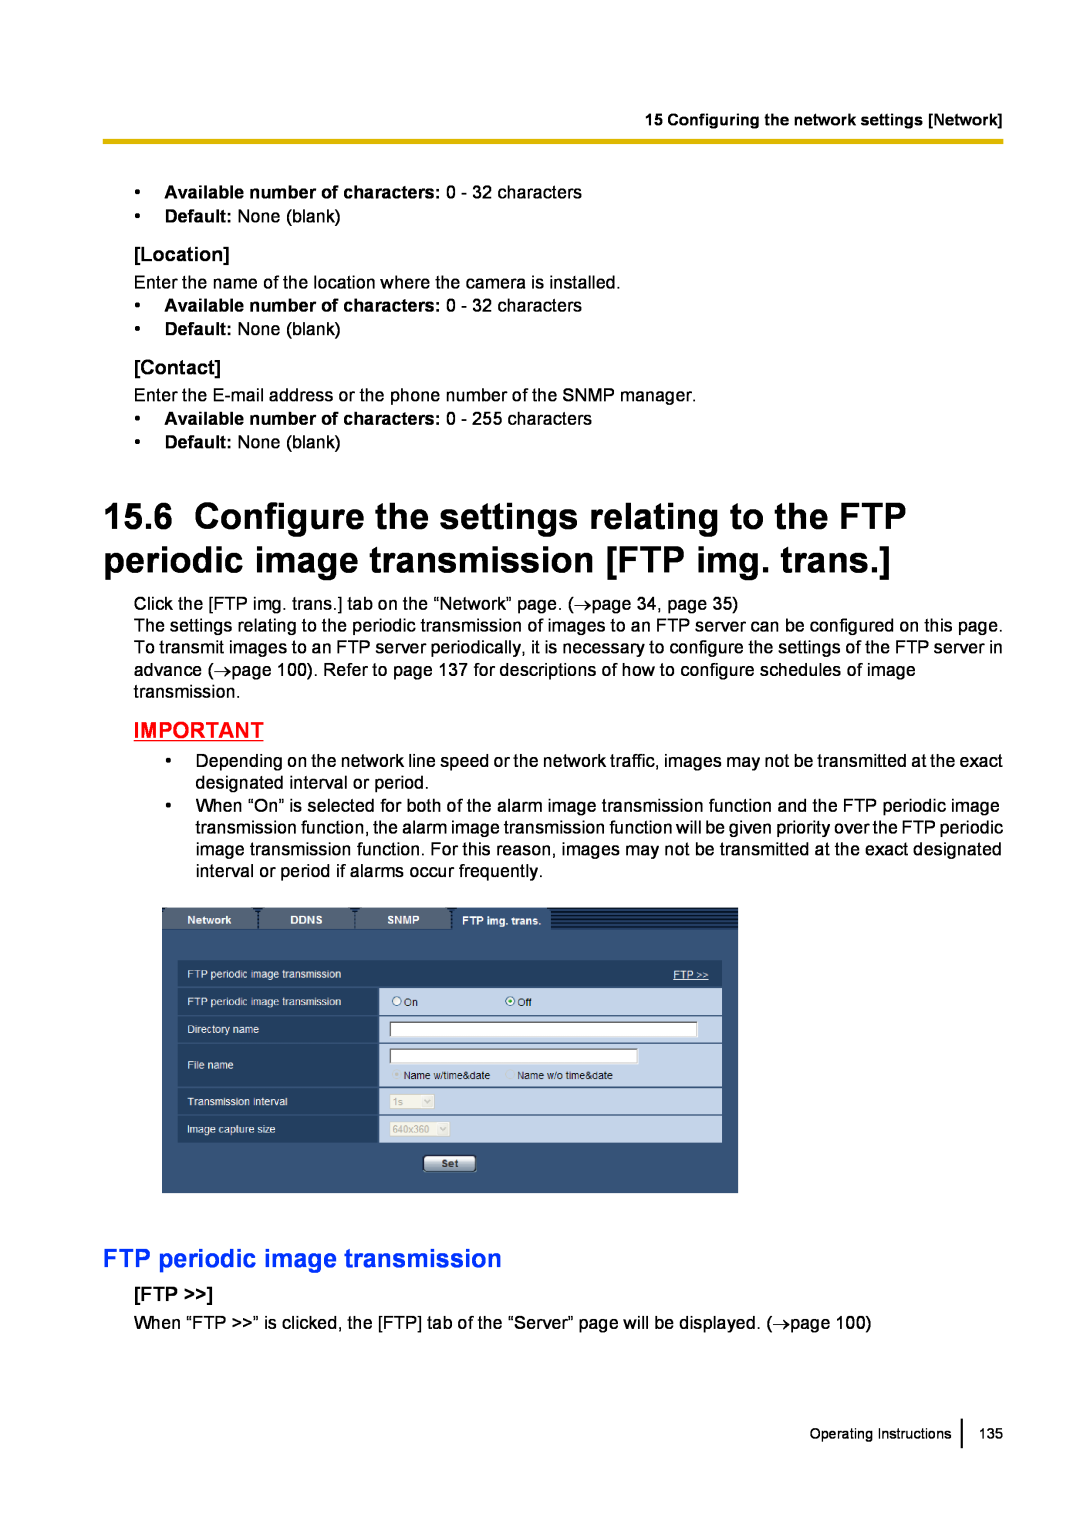 Panasonic BL-VP100, BL-VT164W, BL-VP104W manual FTP periodic image transmission, Location, Contact, Ftp >> 